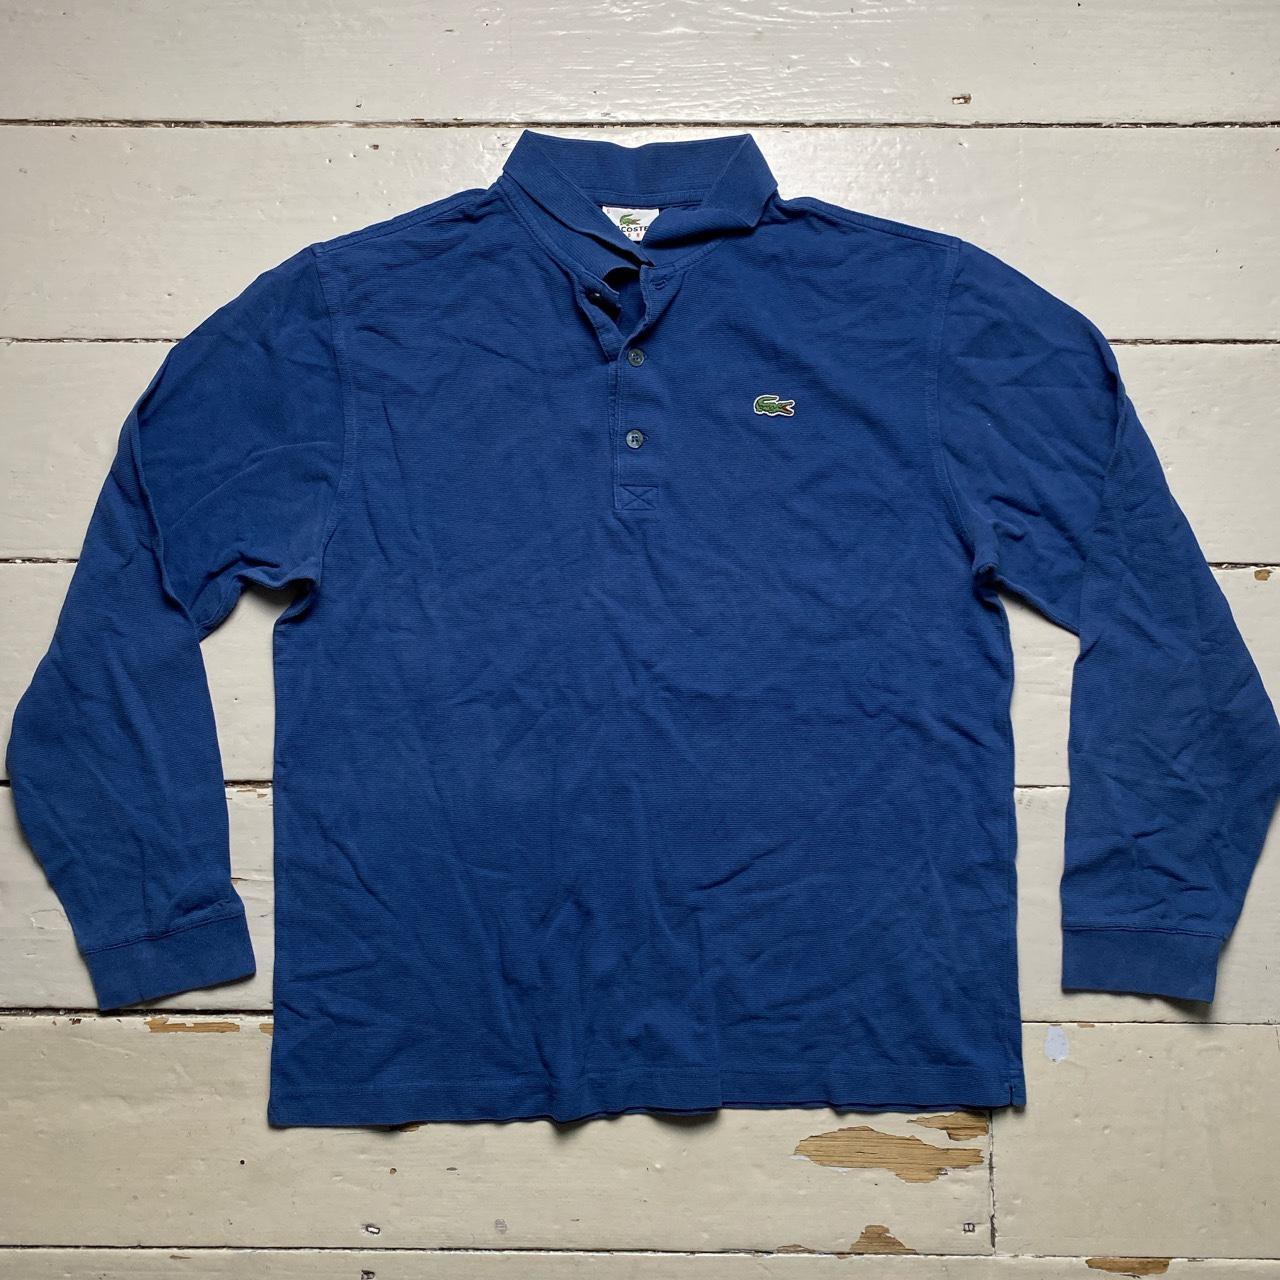 Lacoste Croc Blue Long Sleeve Polo Shirt